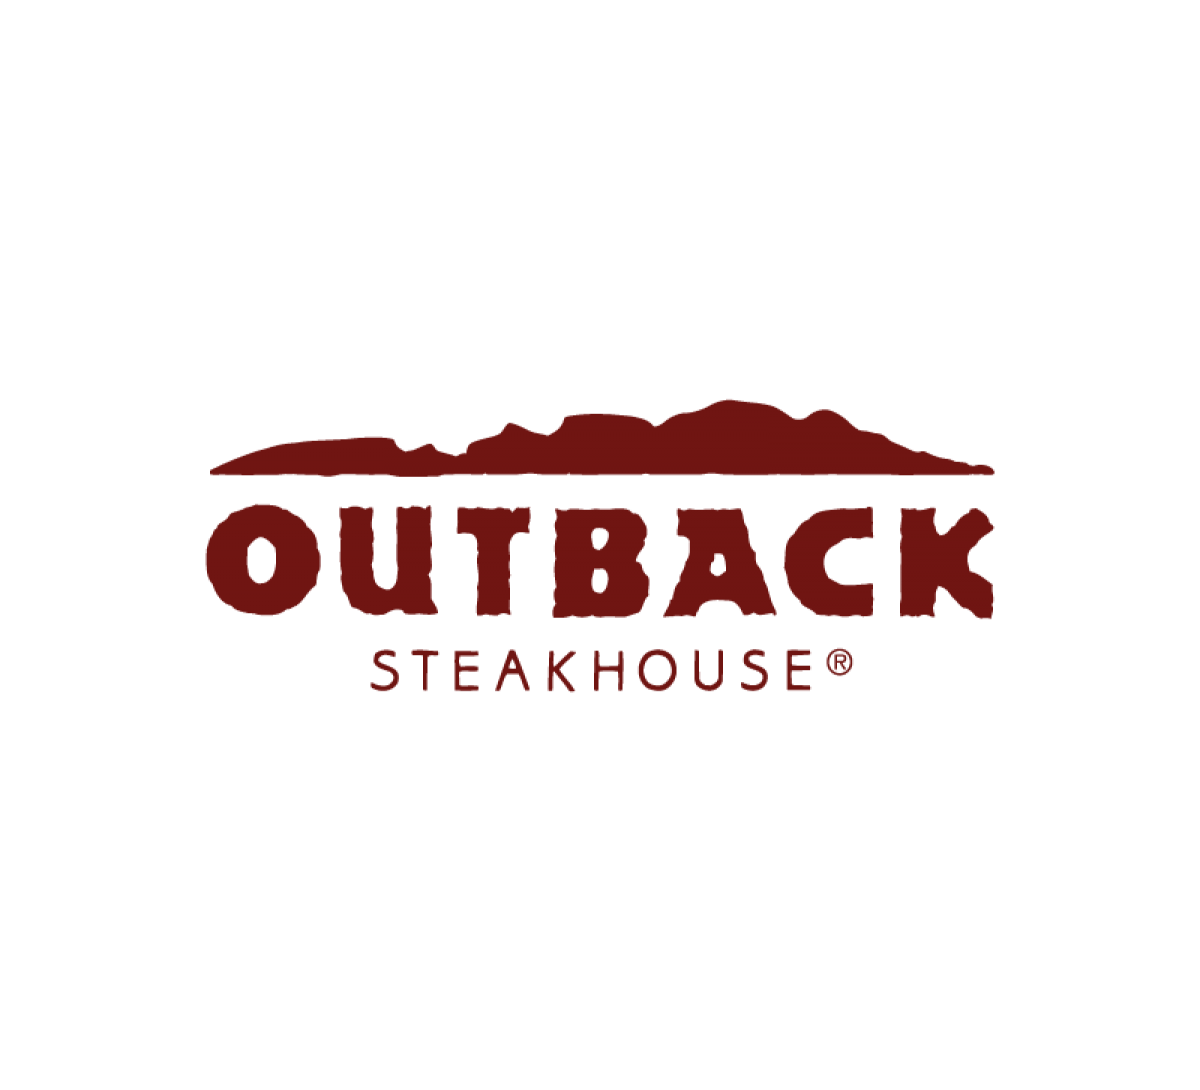 Outback Steakhouse | Infinity Studio